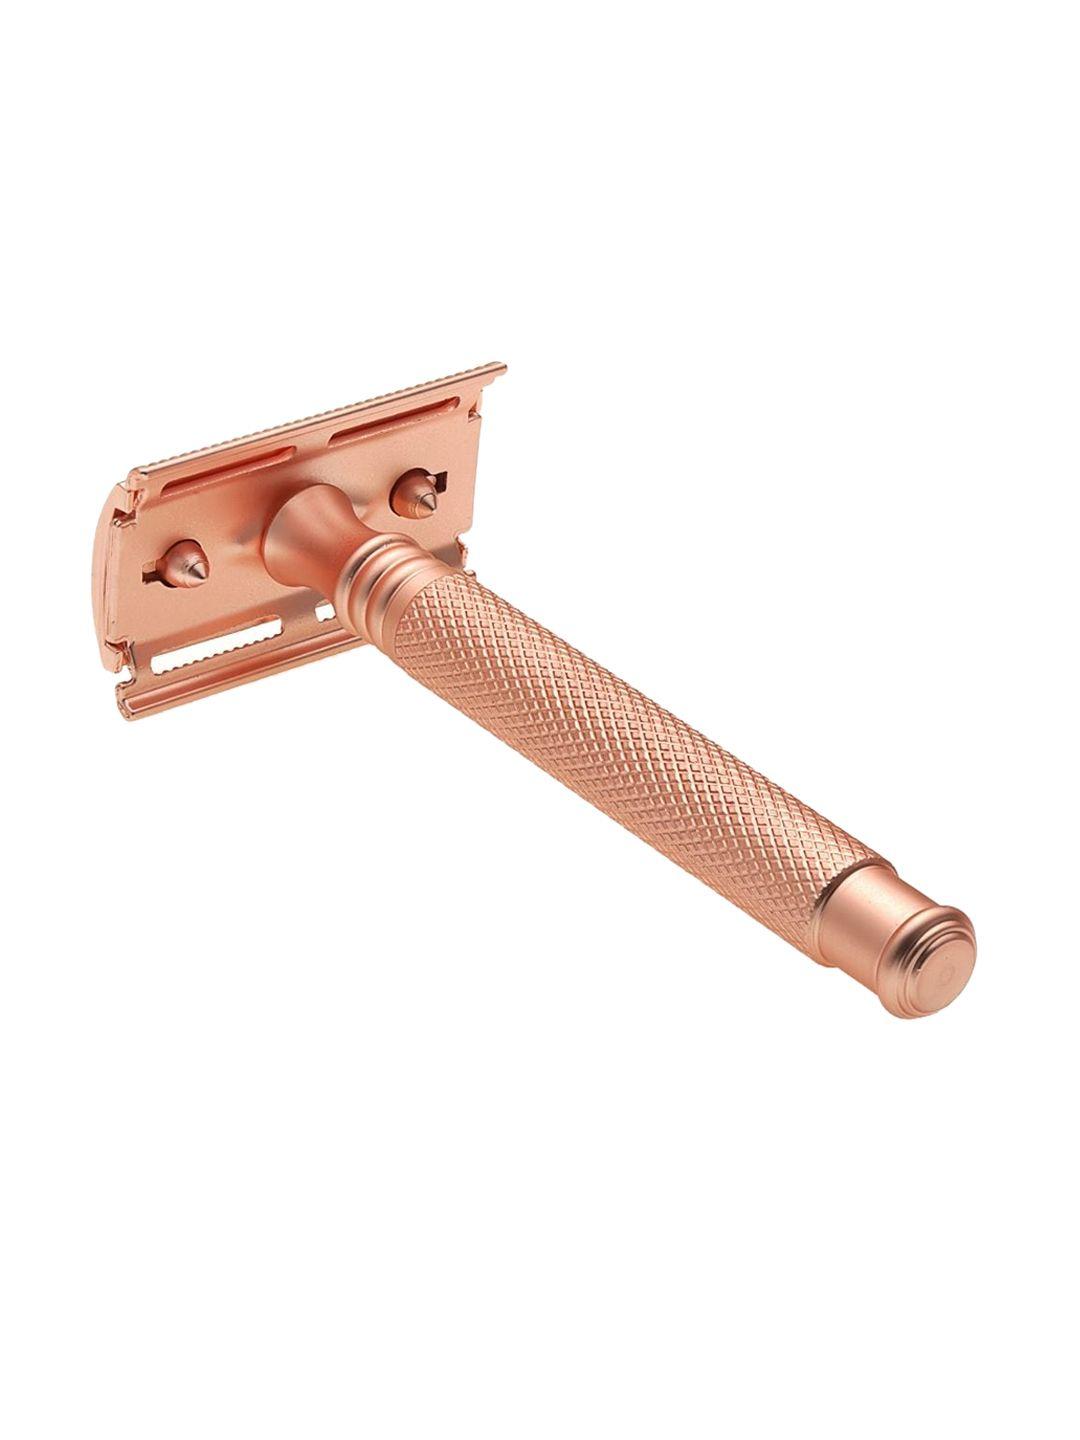 hajamat rose gold-toned stainless steel 304 edge safety razor